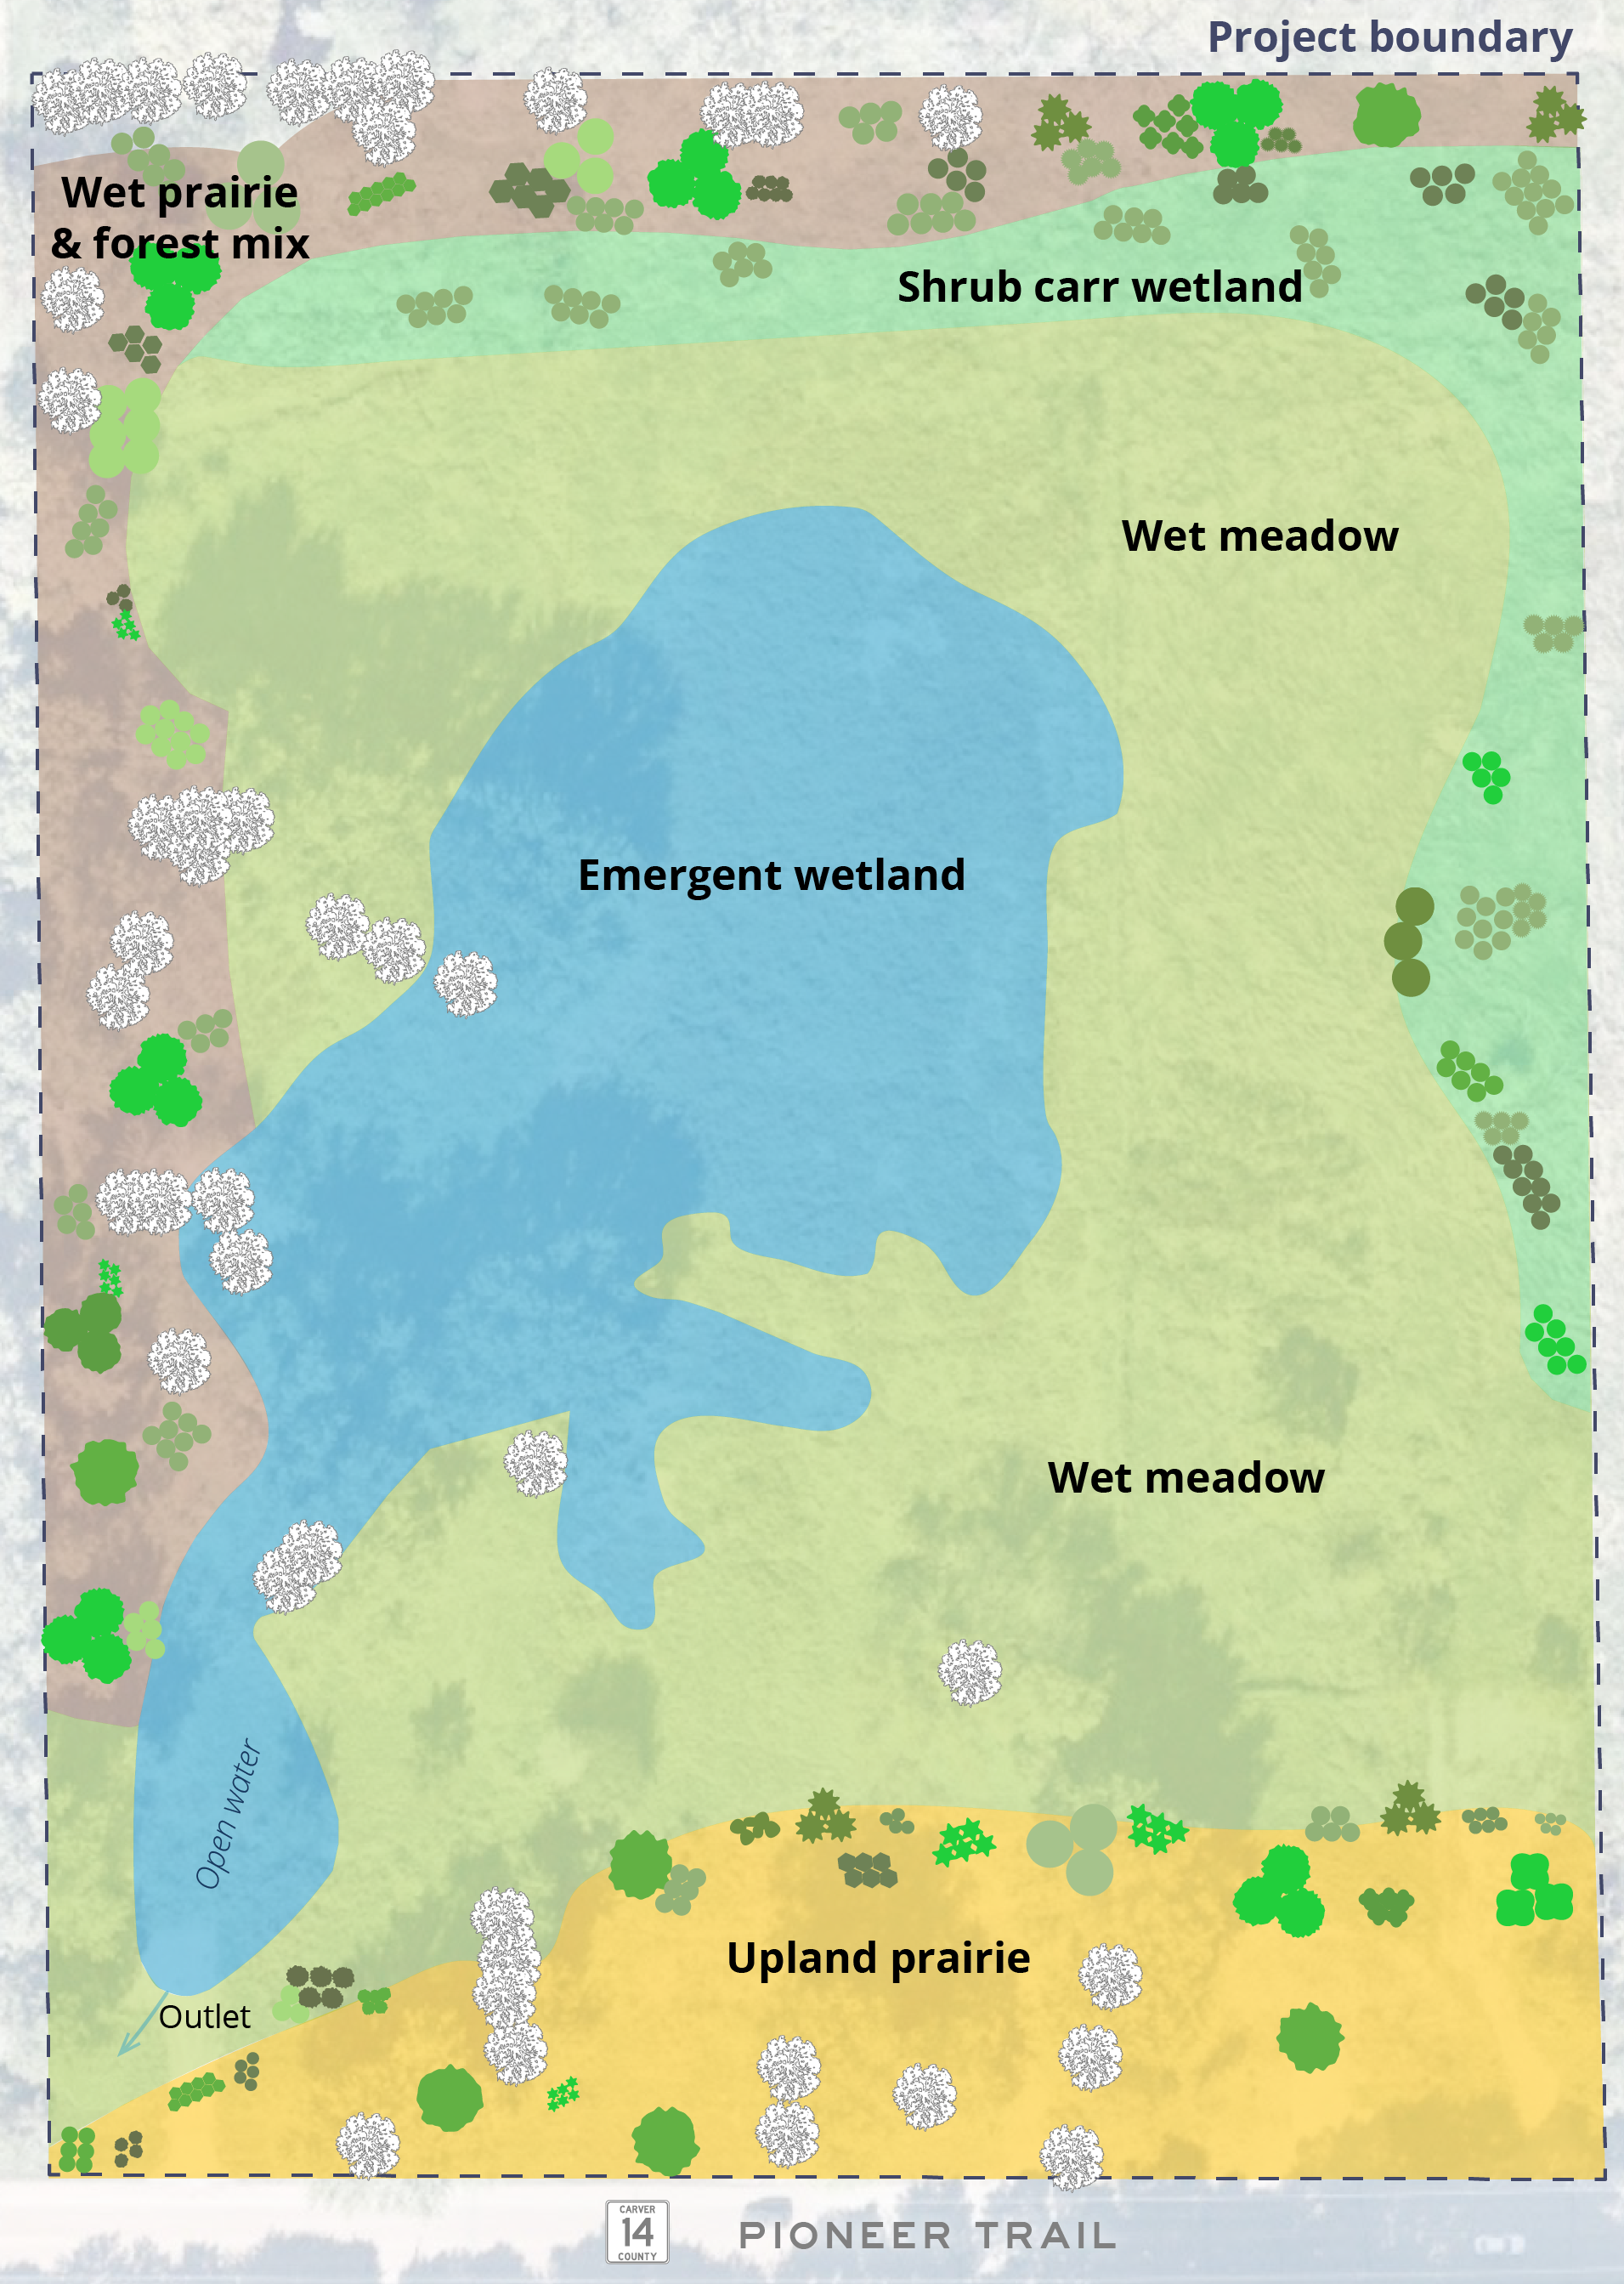 Project restoration plan showing habitat types.